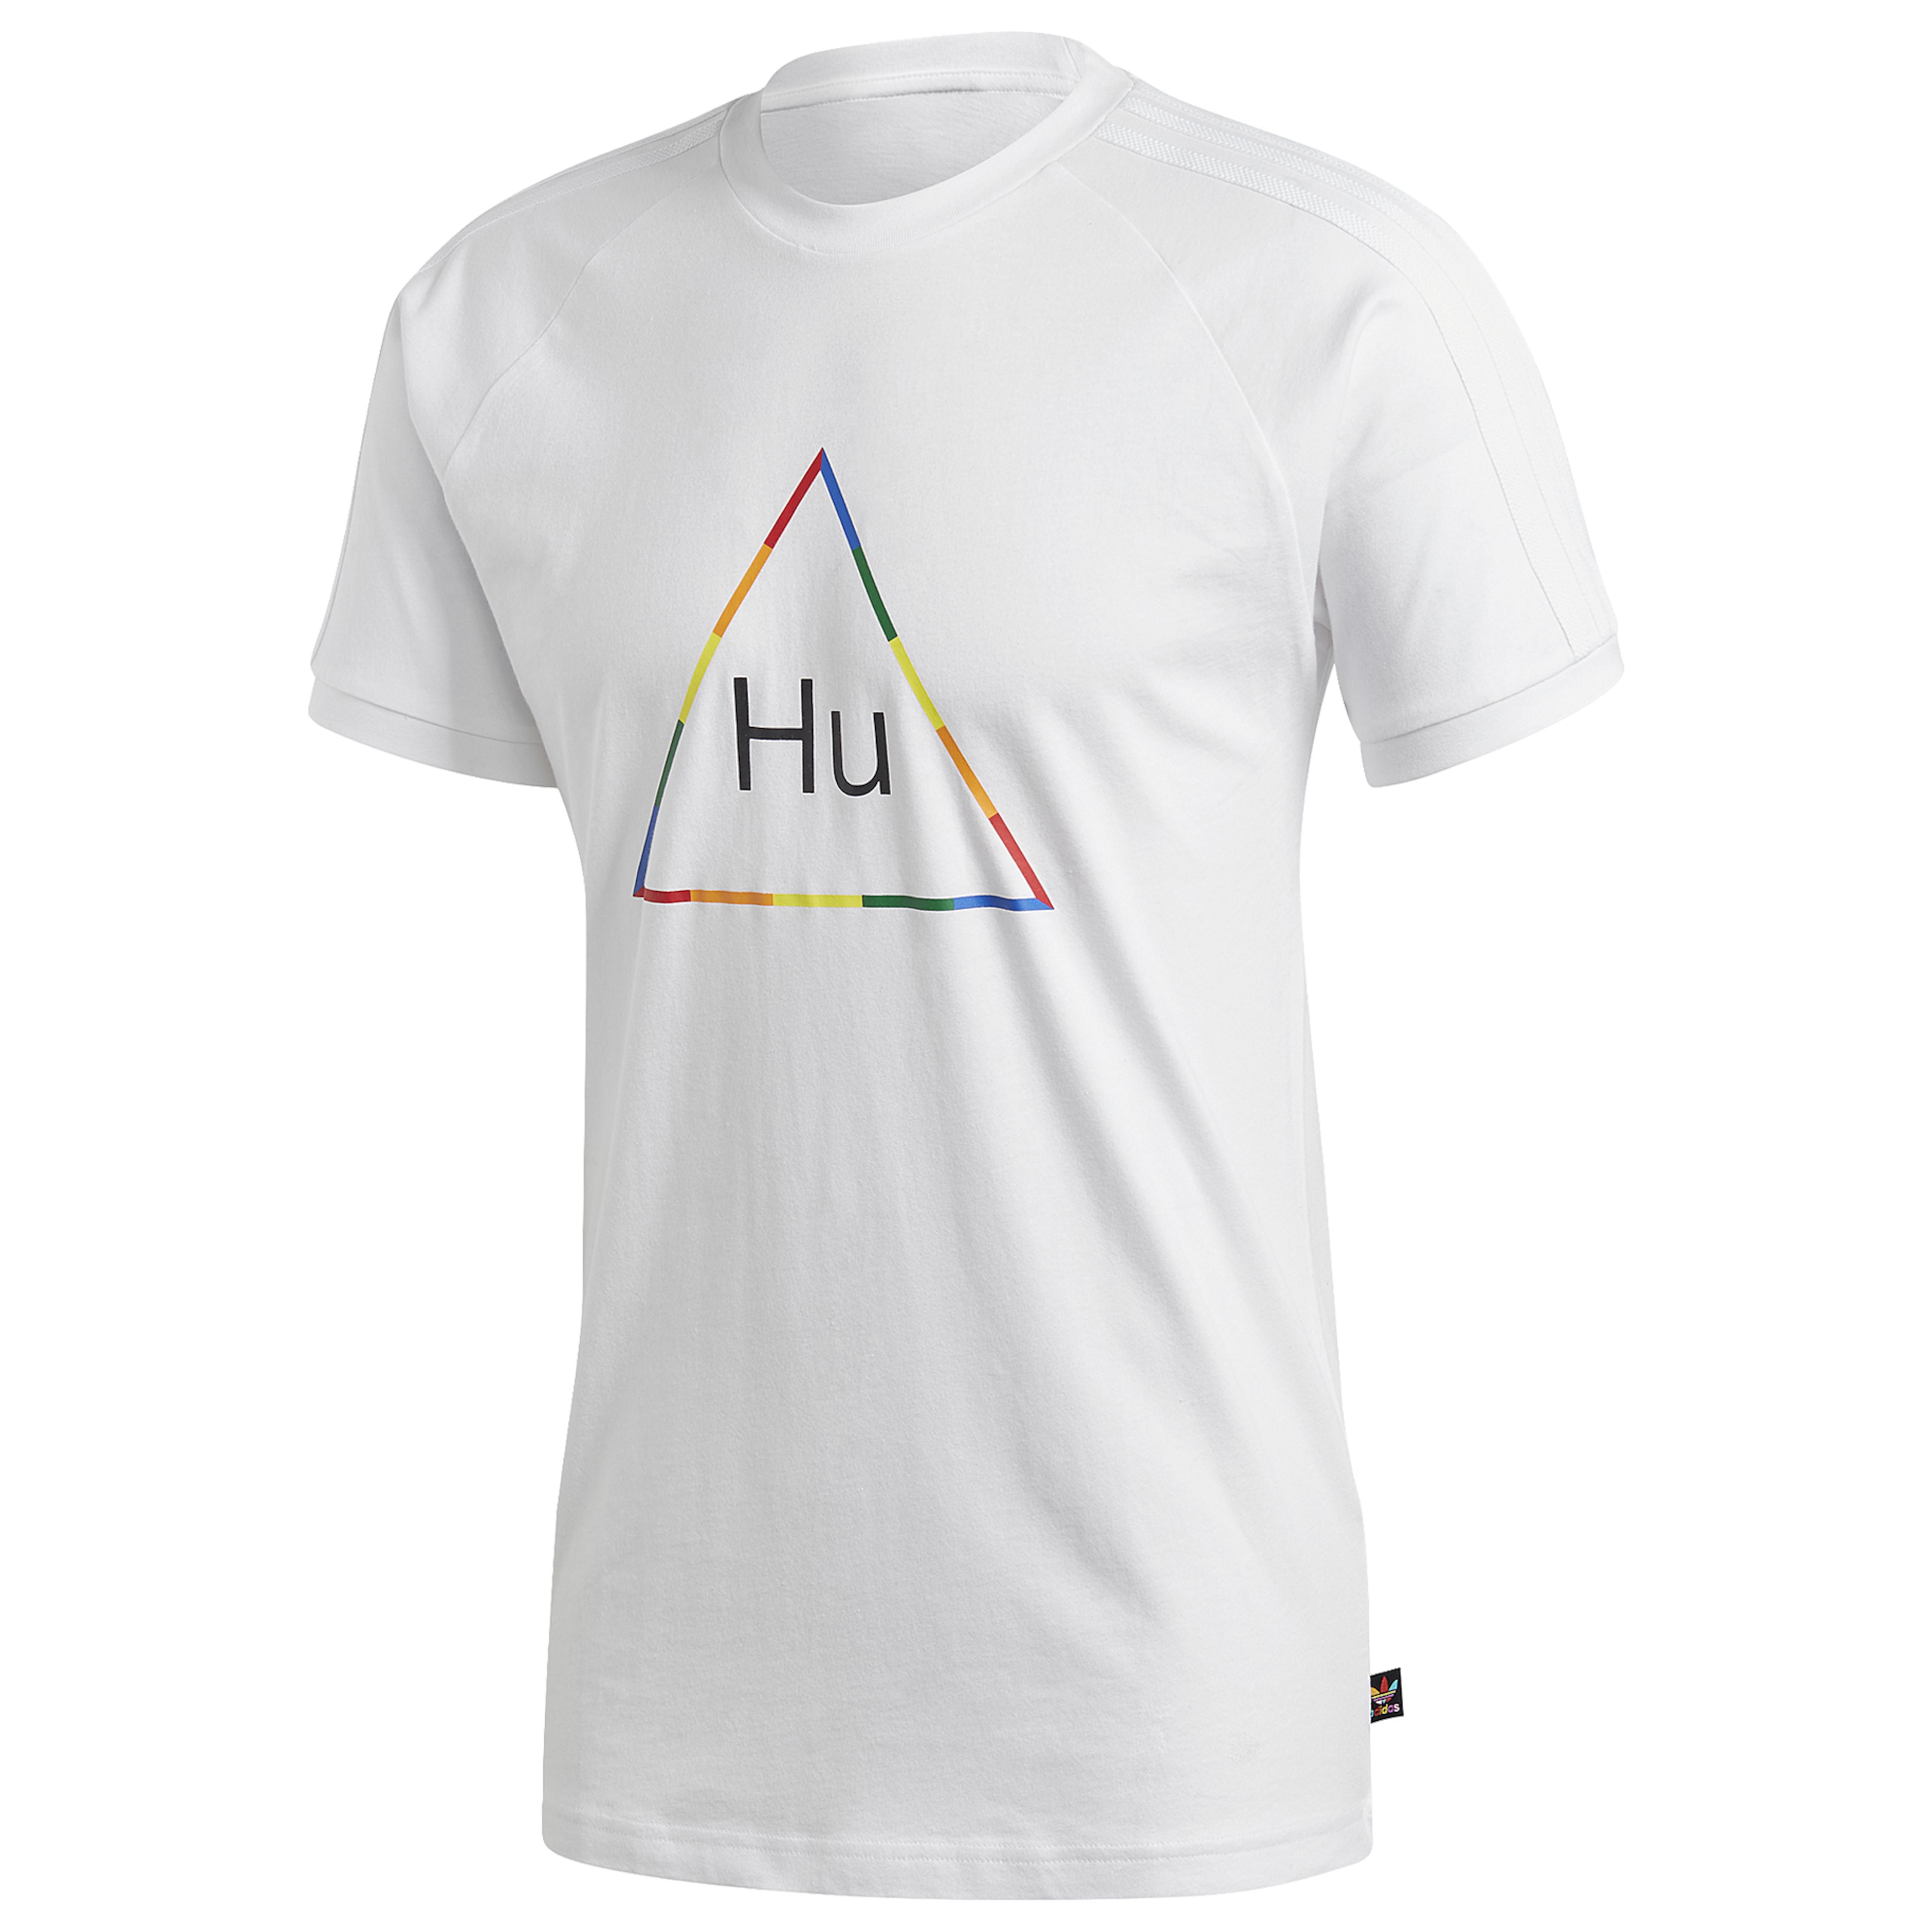 T Shirt Human Race Shop, SAVE 30% - lutheranems.com